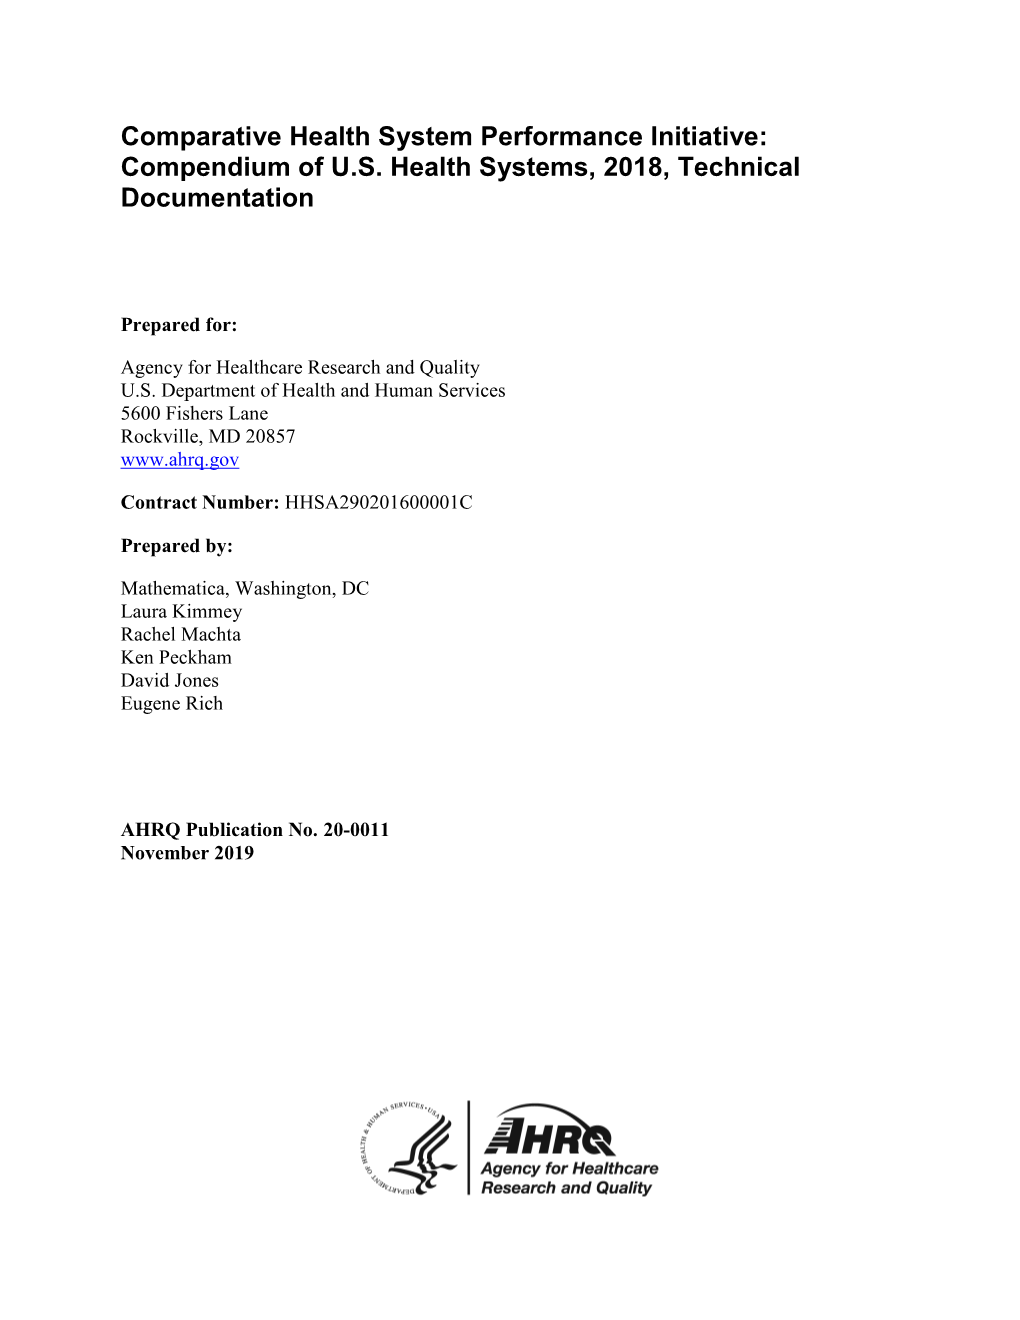 Compendium of US Health Systems, 2018, Technical Documentation-Appendix B